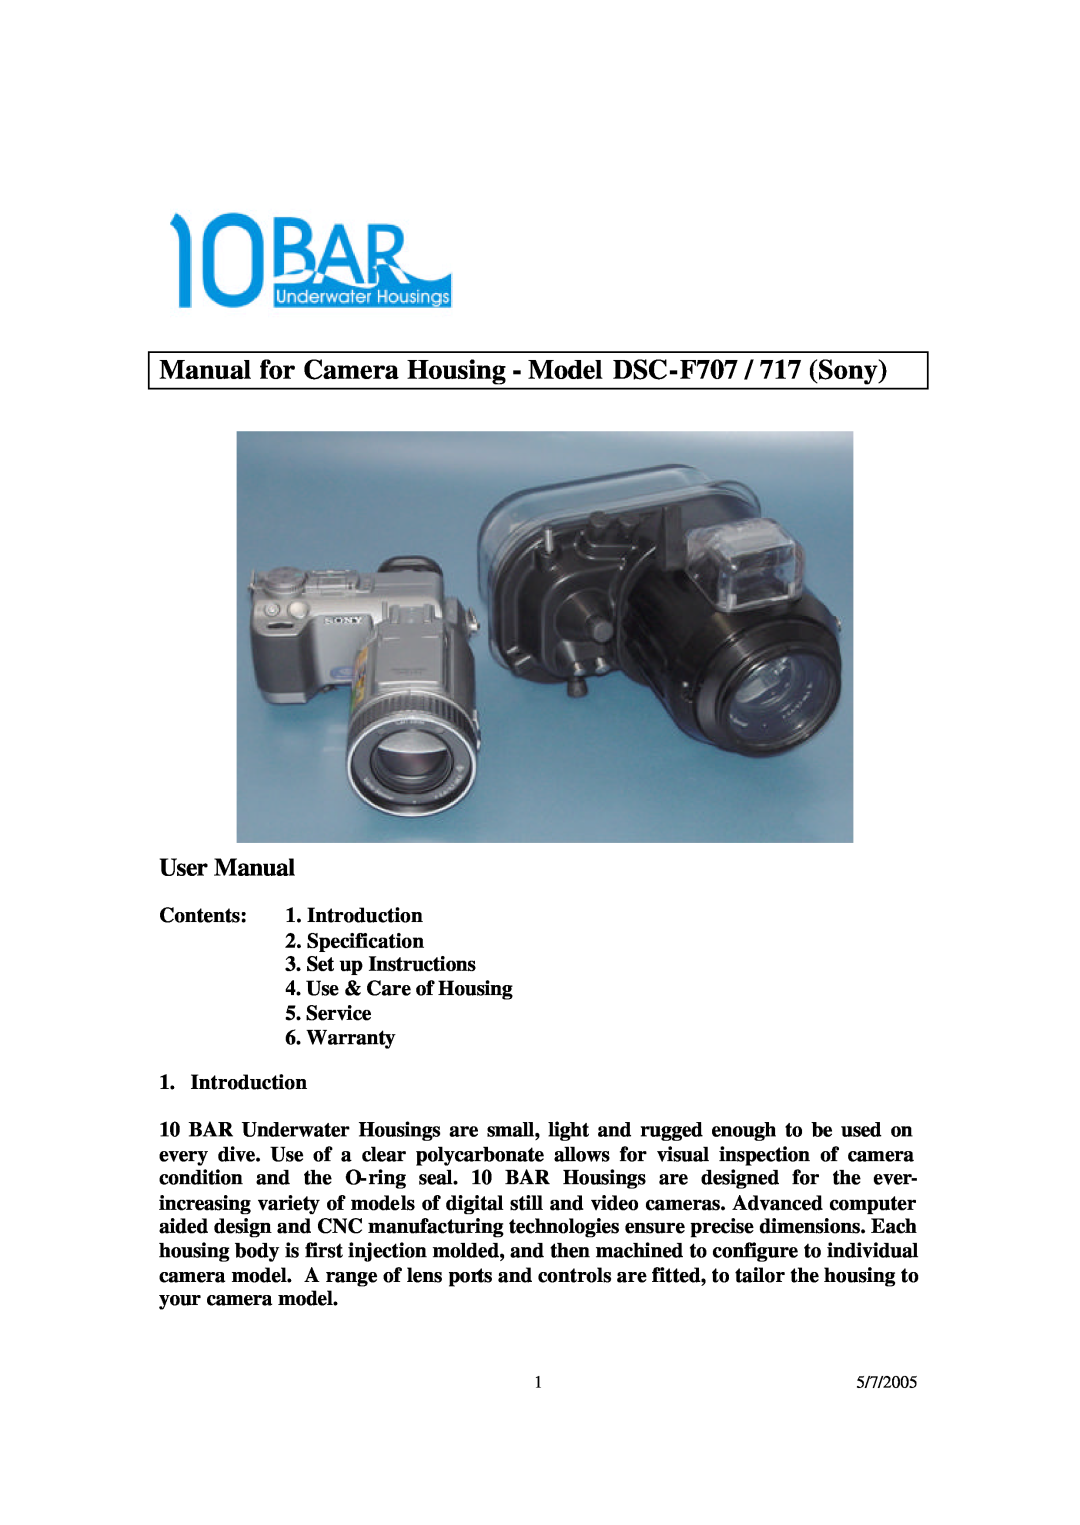 Sony user manual User Manual, Manual for Camera Housing - Model DSC-F707 / 717 Sony 